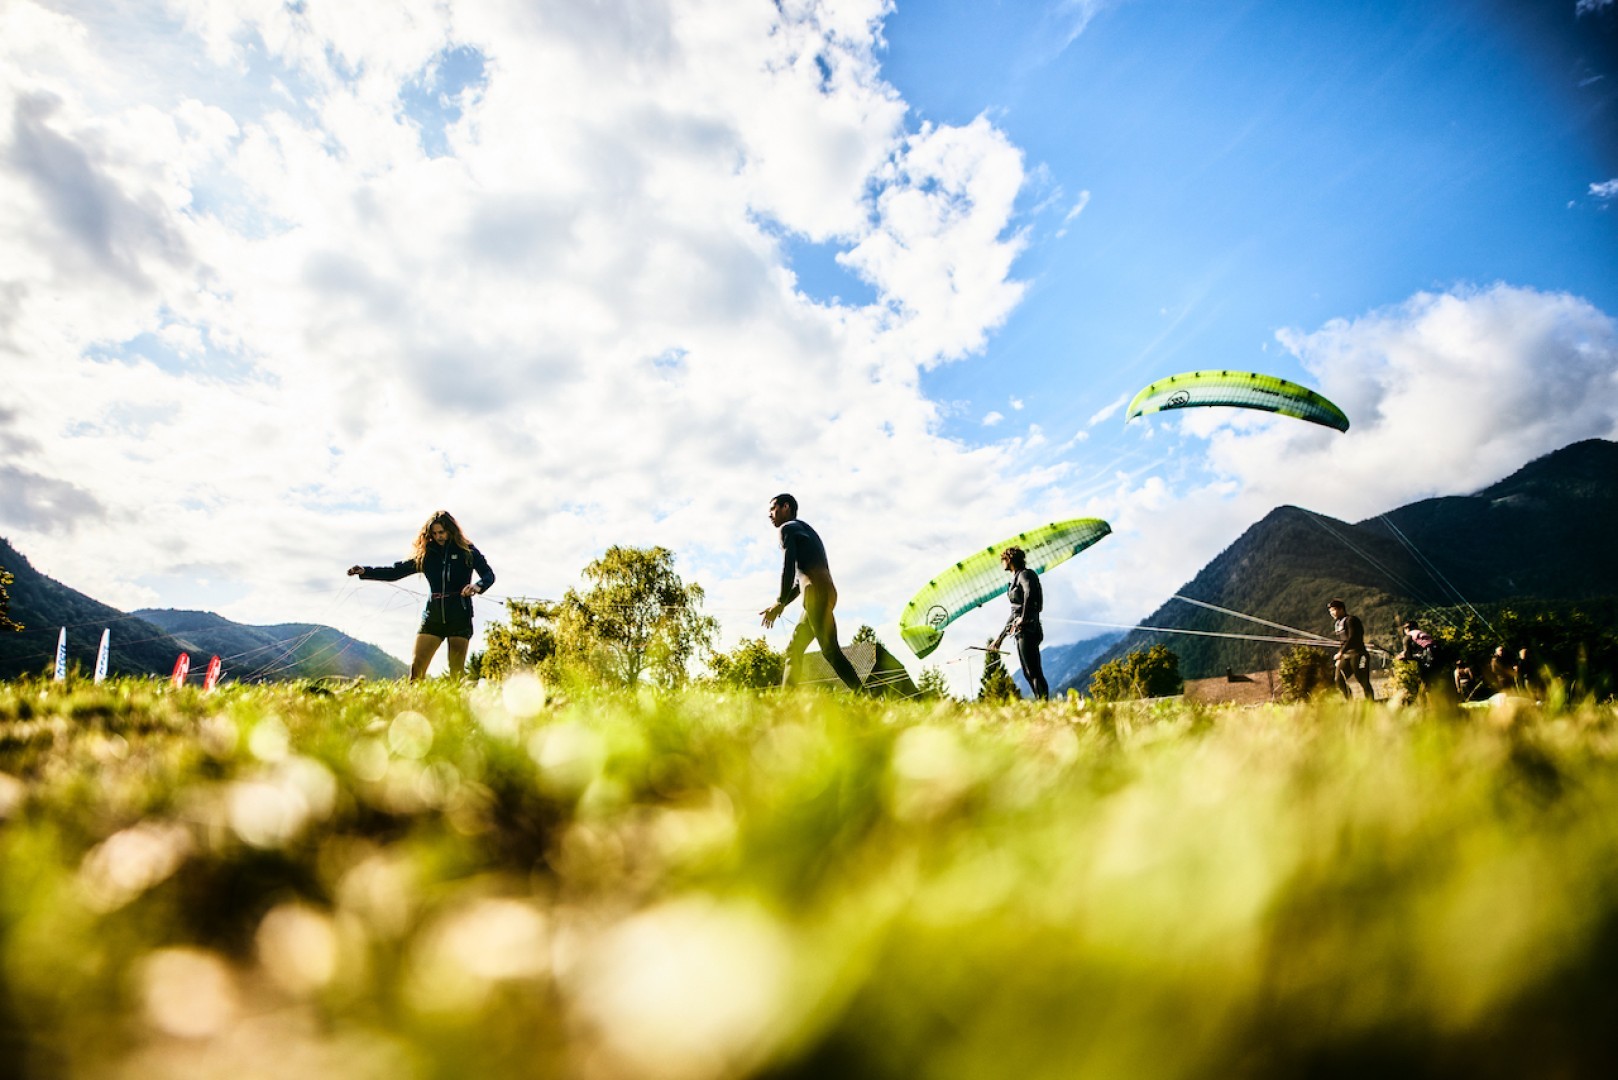 © IKA media / Robert Hajduk: Kiters love a grassy beach for launch and recovery